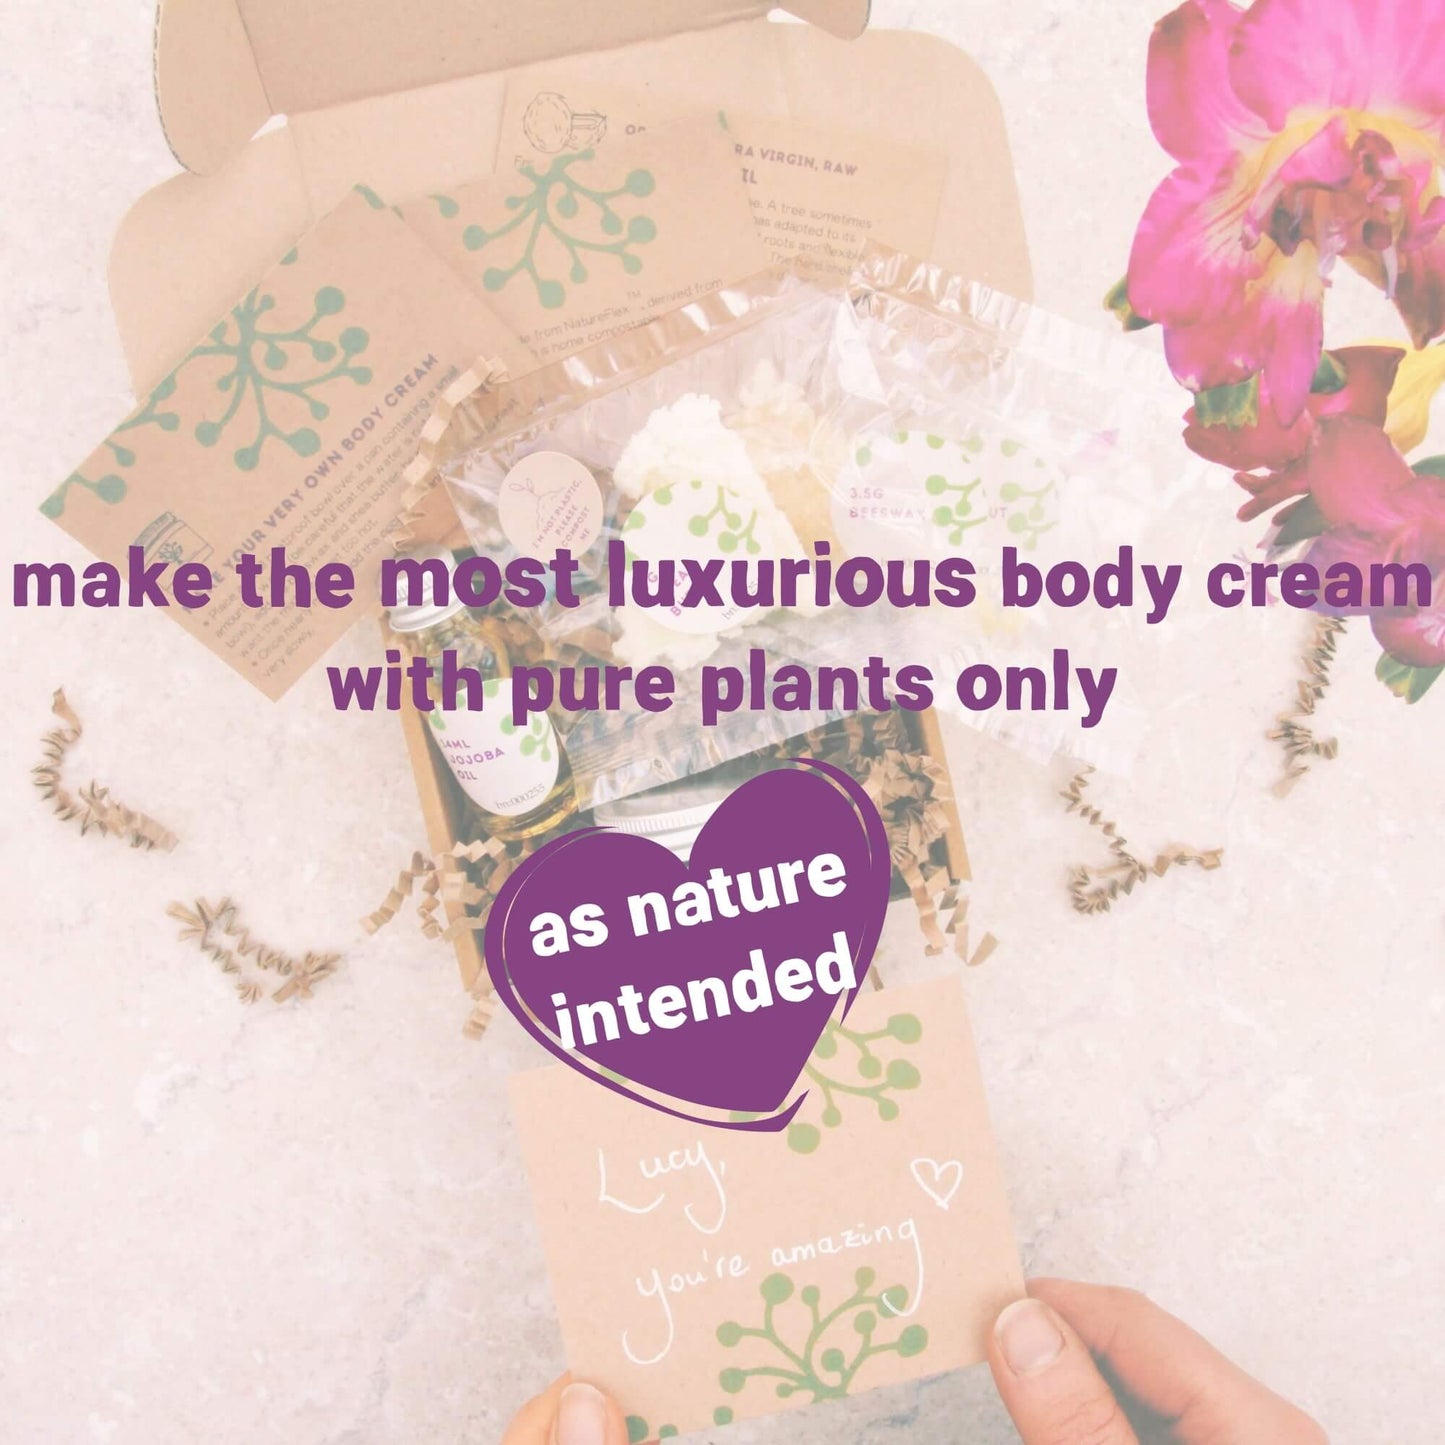 eco-friendly body cream inside 20th birthday gift box